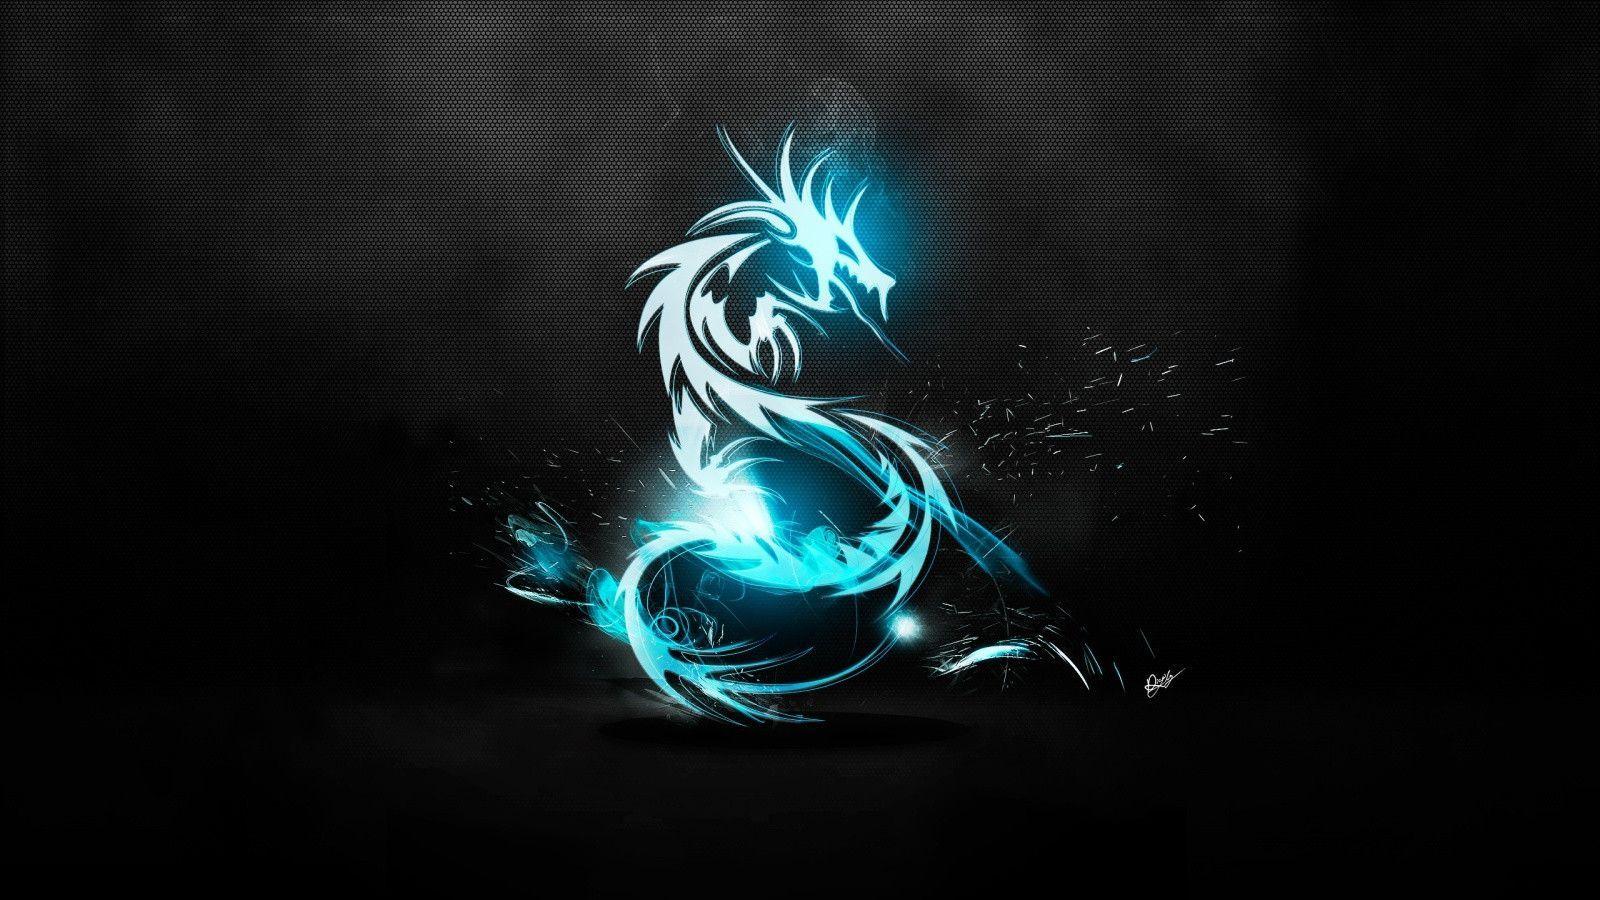 Cool Blue Dragon Logo - Blue Dragon Wallpapers - Wallpaper Cave